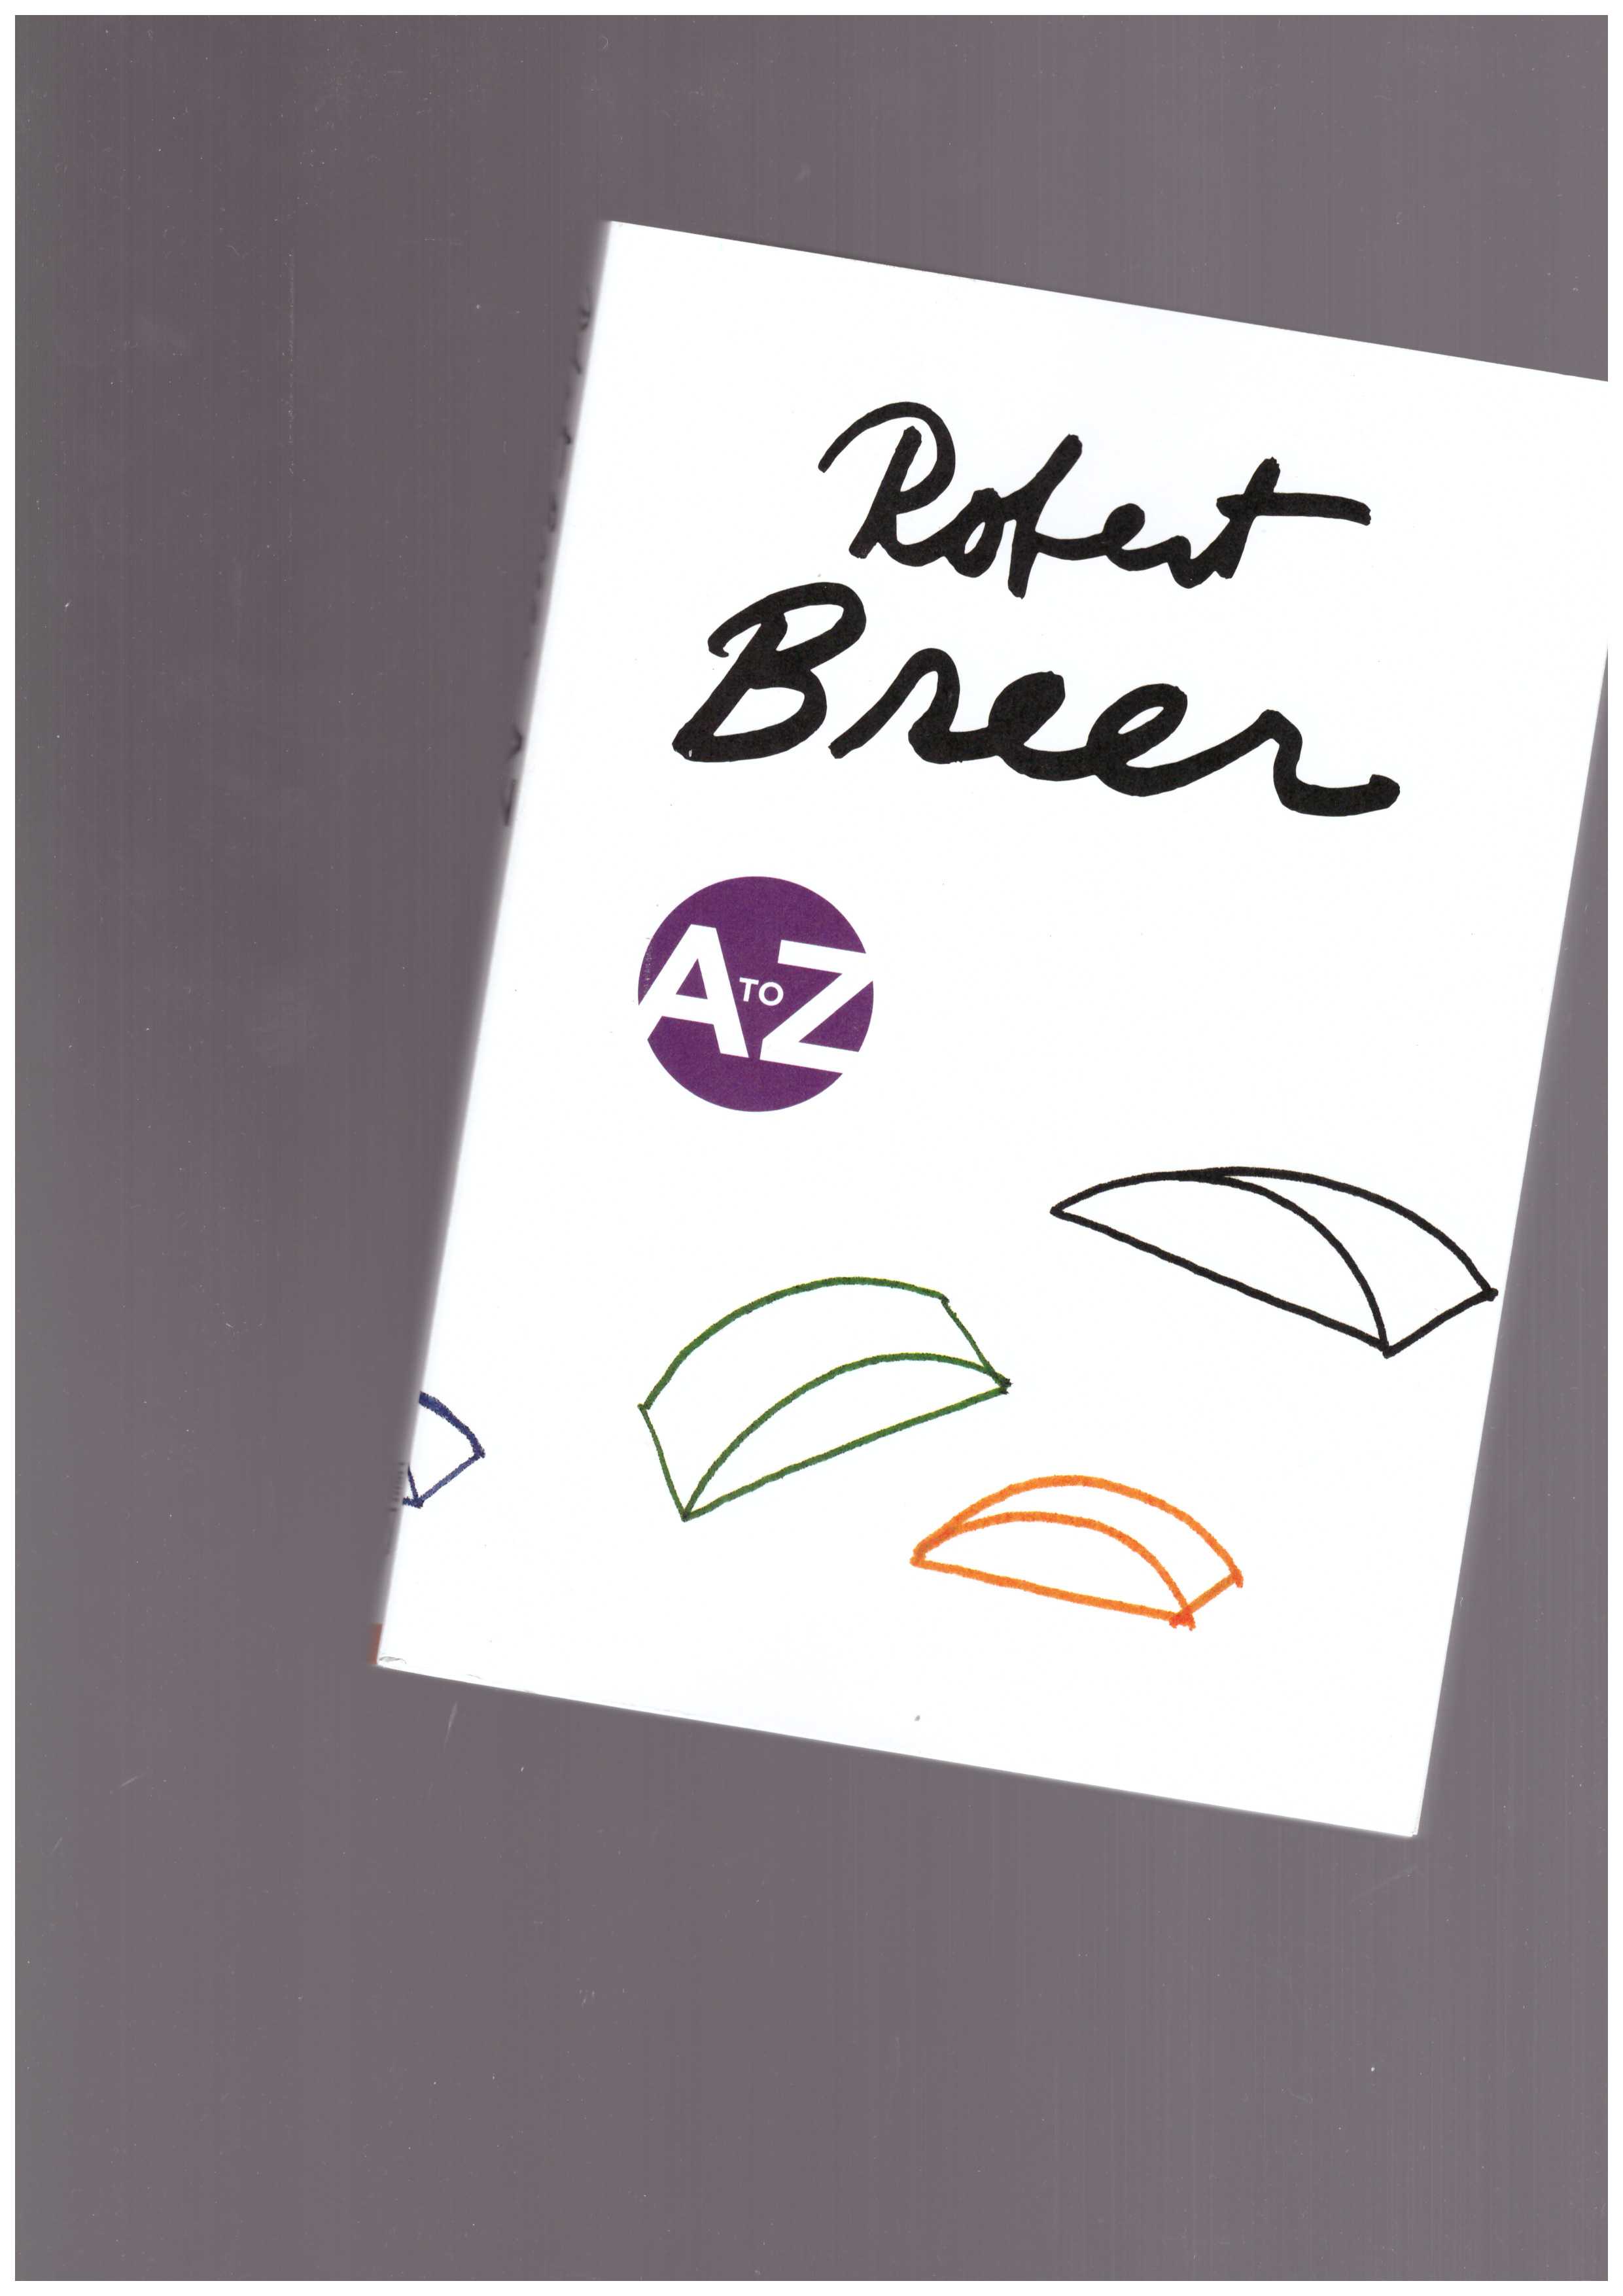 BREER, Robert - Robert Breer A to Z